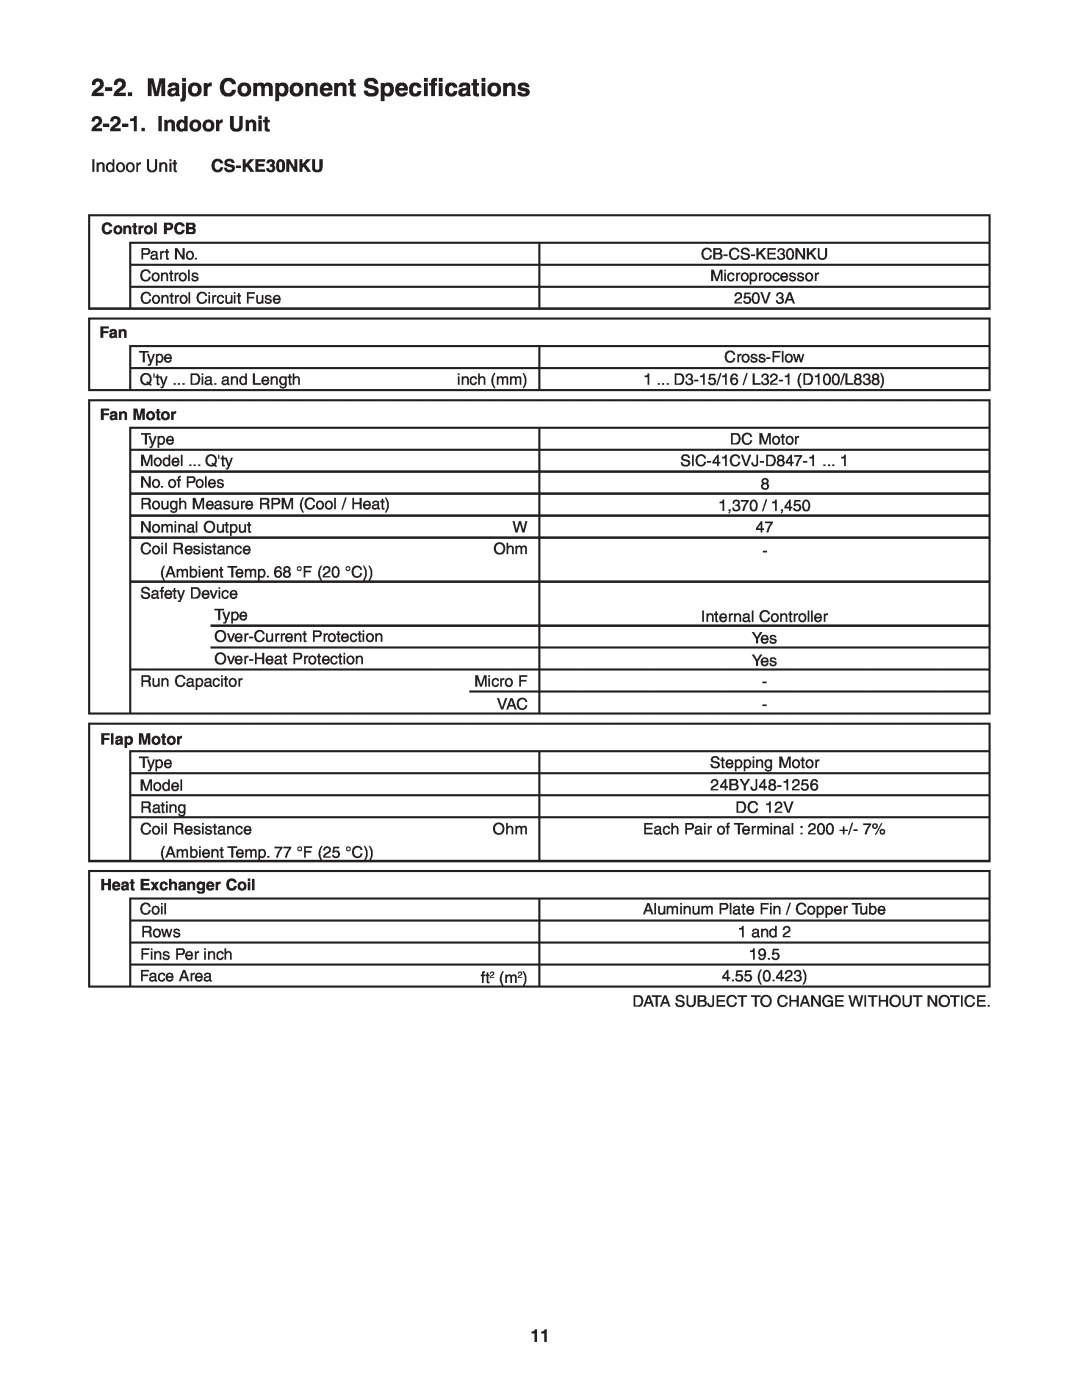 Panasonic CS-KE30NKU Major Component Specifications, Indoor Unit, Control PCB, Fan Motor, Flap Motor, Heat Exchanger Coil 